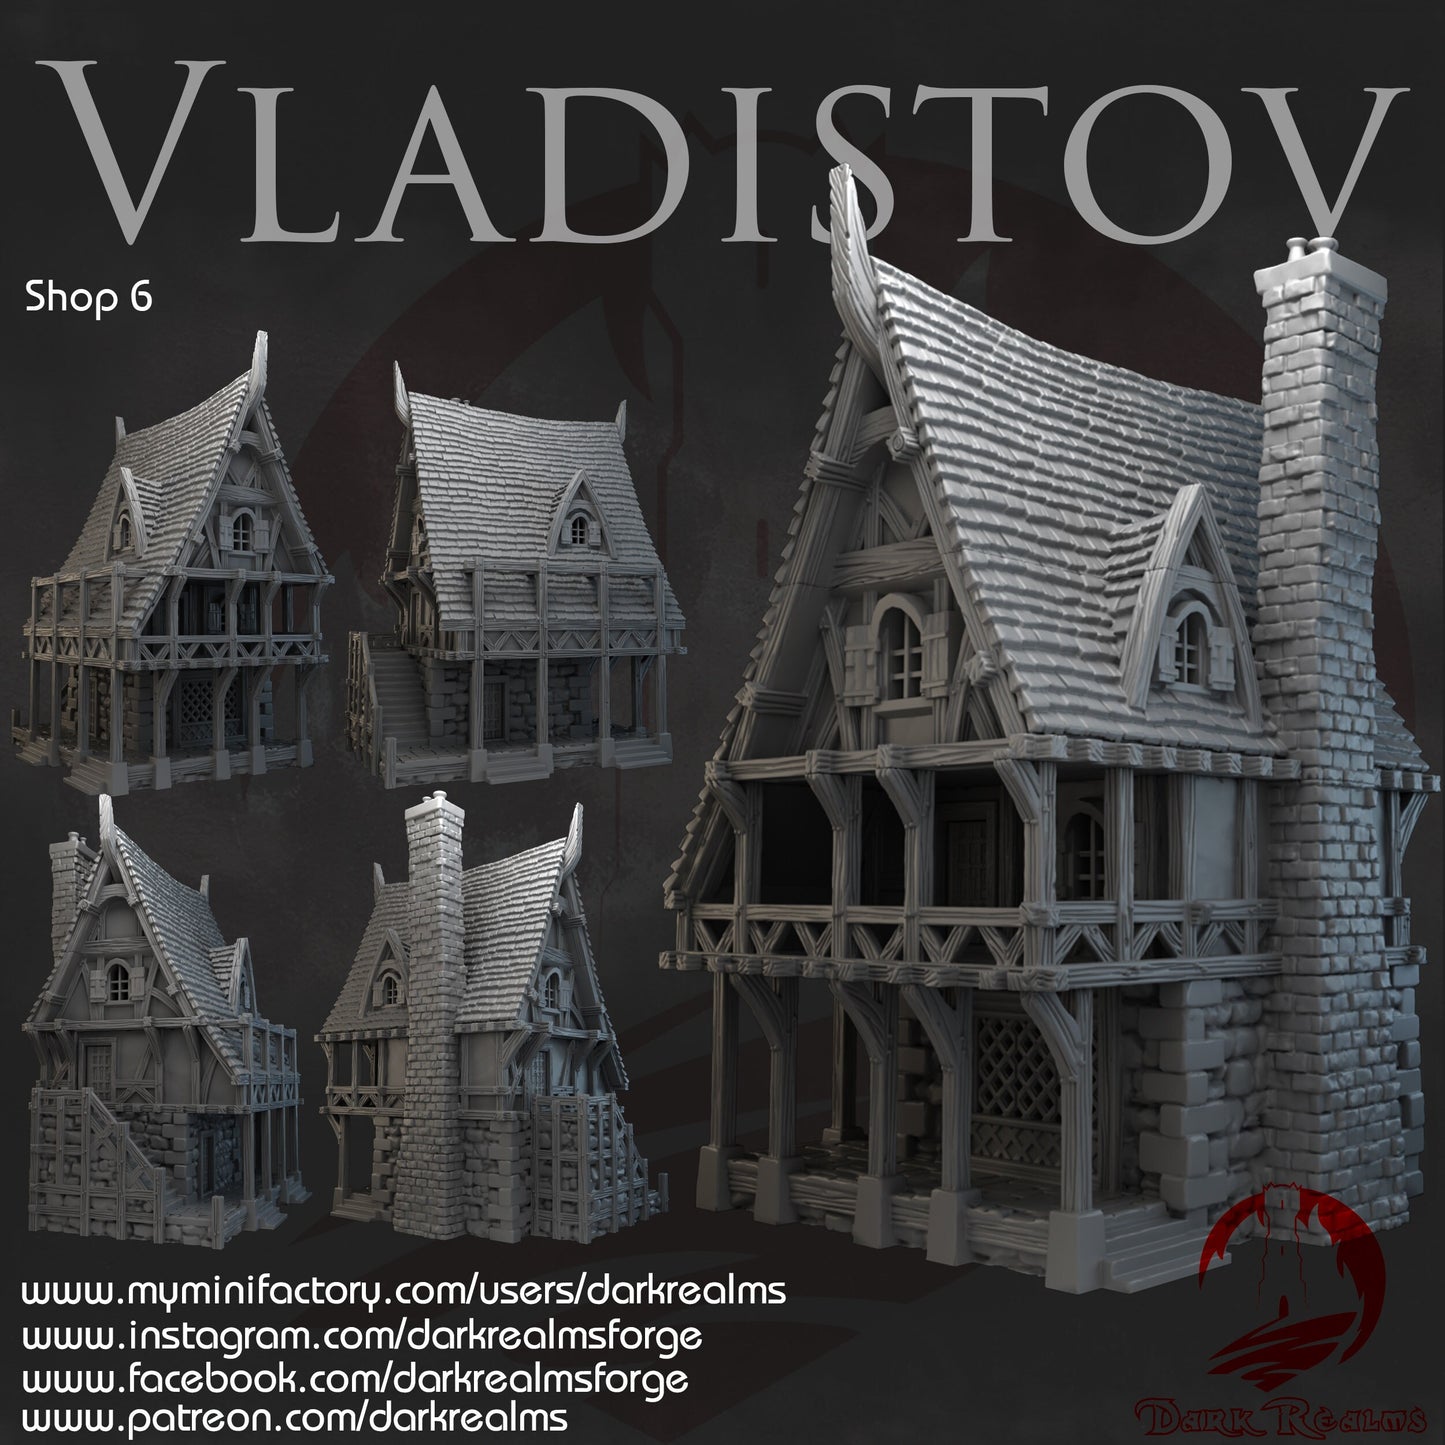 Vladistov, Shop 6, Vampire Town, DND Terrain. Strahd